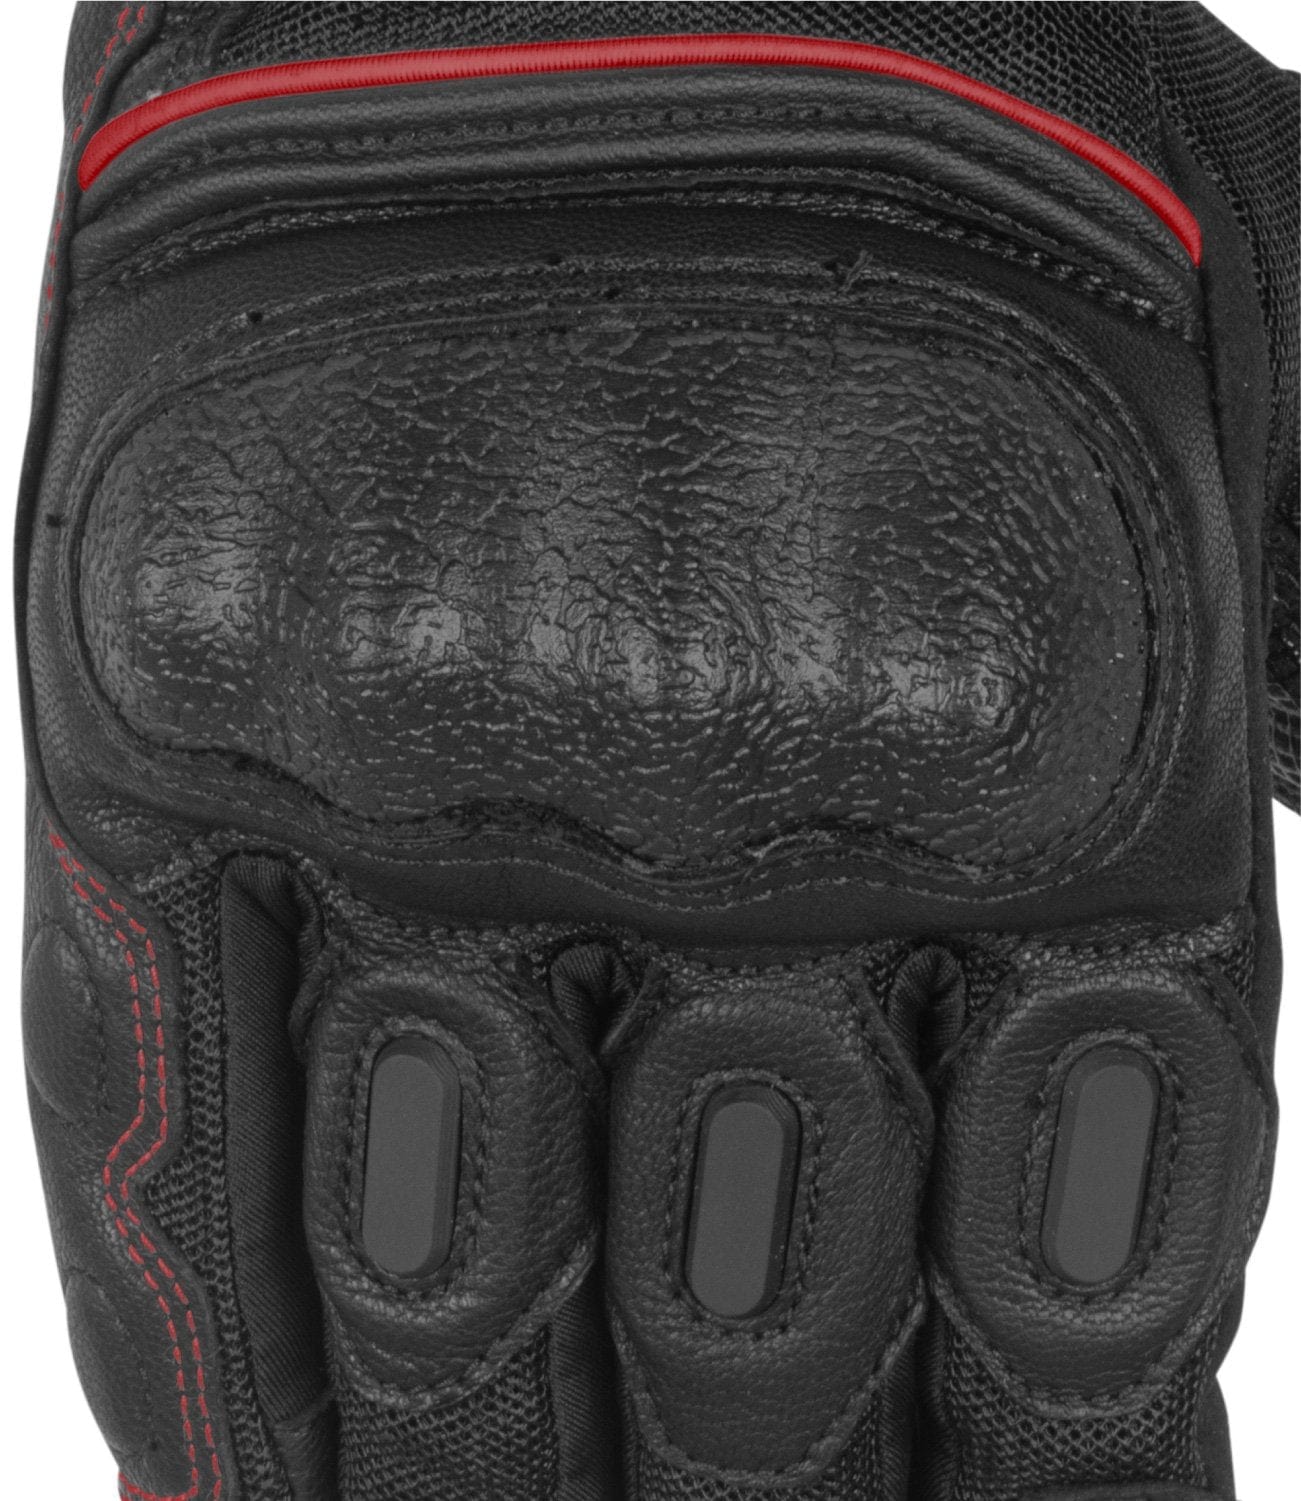 Rynox Tornado Pro 3 Gloves Black Red - Destination Moto